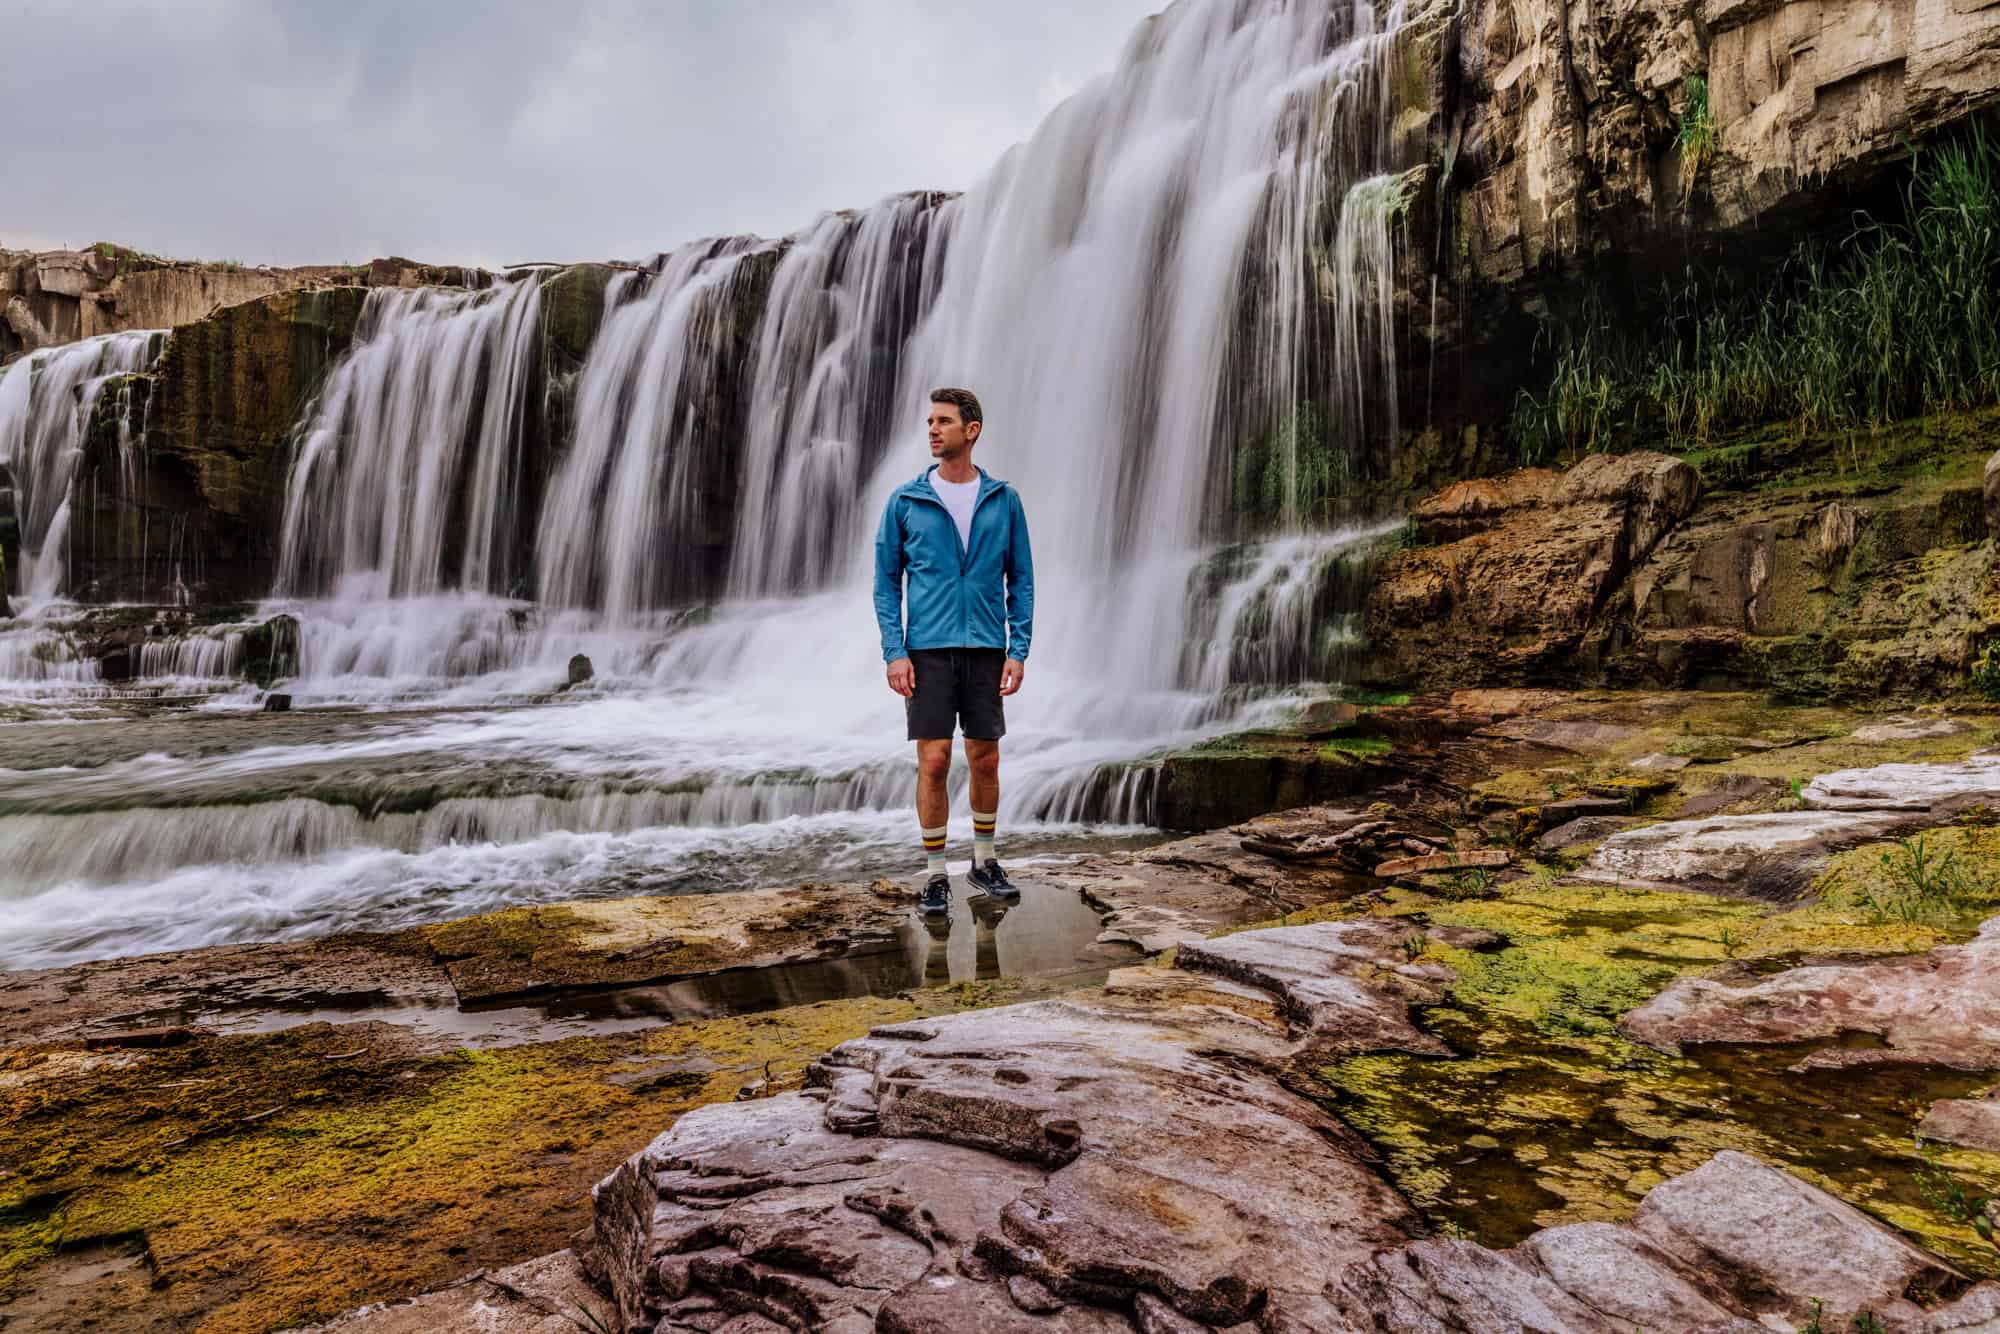 Jared Dillingham at Black Eagle Falls in Great Falls, MT